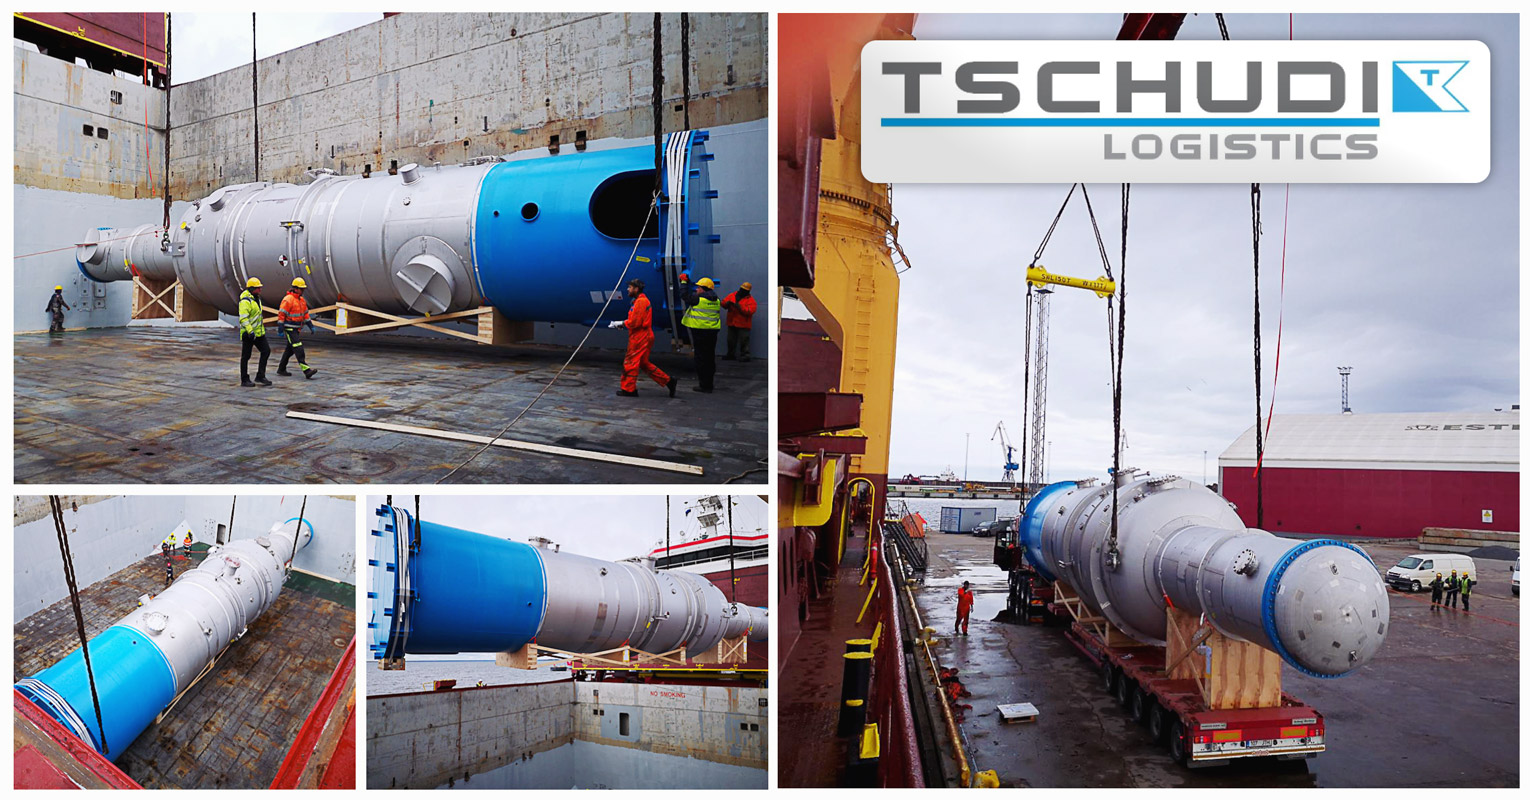 Tschudi Handled the Cargo Reception and Transshipment for a Large Boiler in Port of Paldiski, Estonia